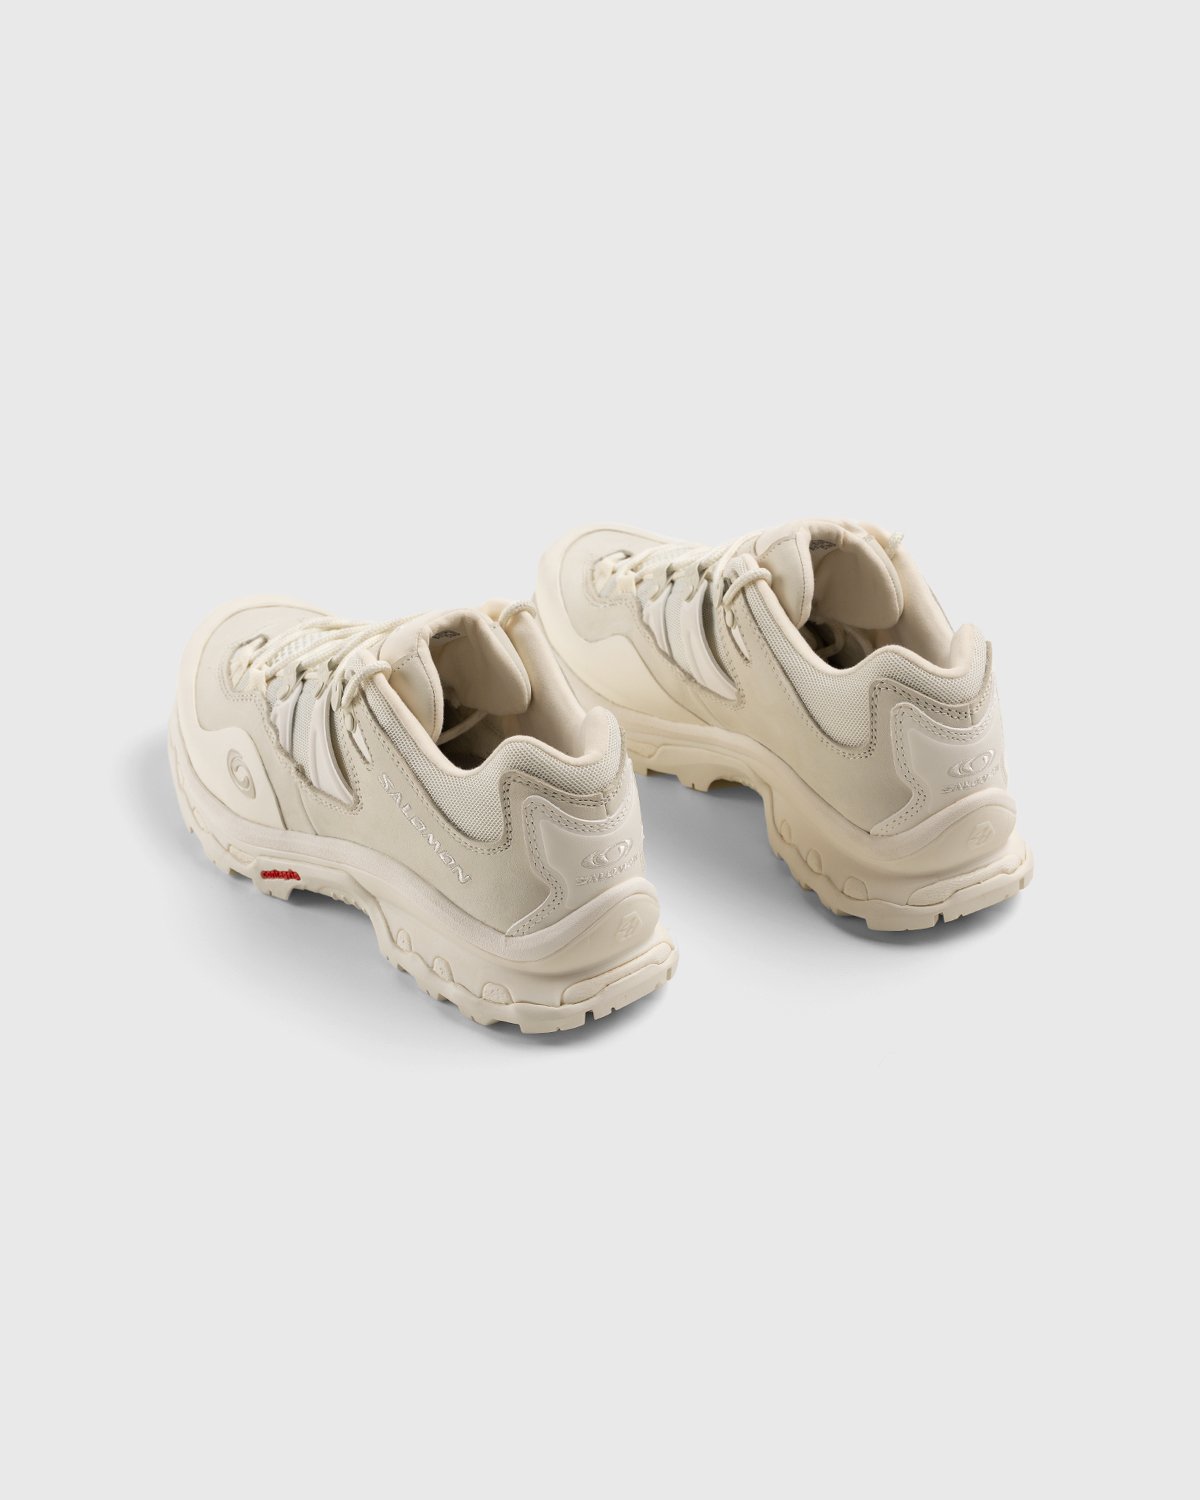 Salomon - XT-Quest 2 Advanced Vanila/Rainy - Footwear - Beige - Image 4